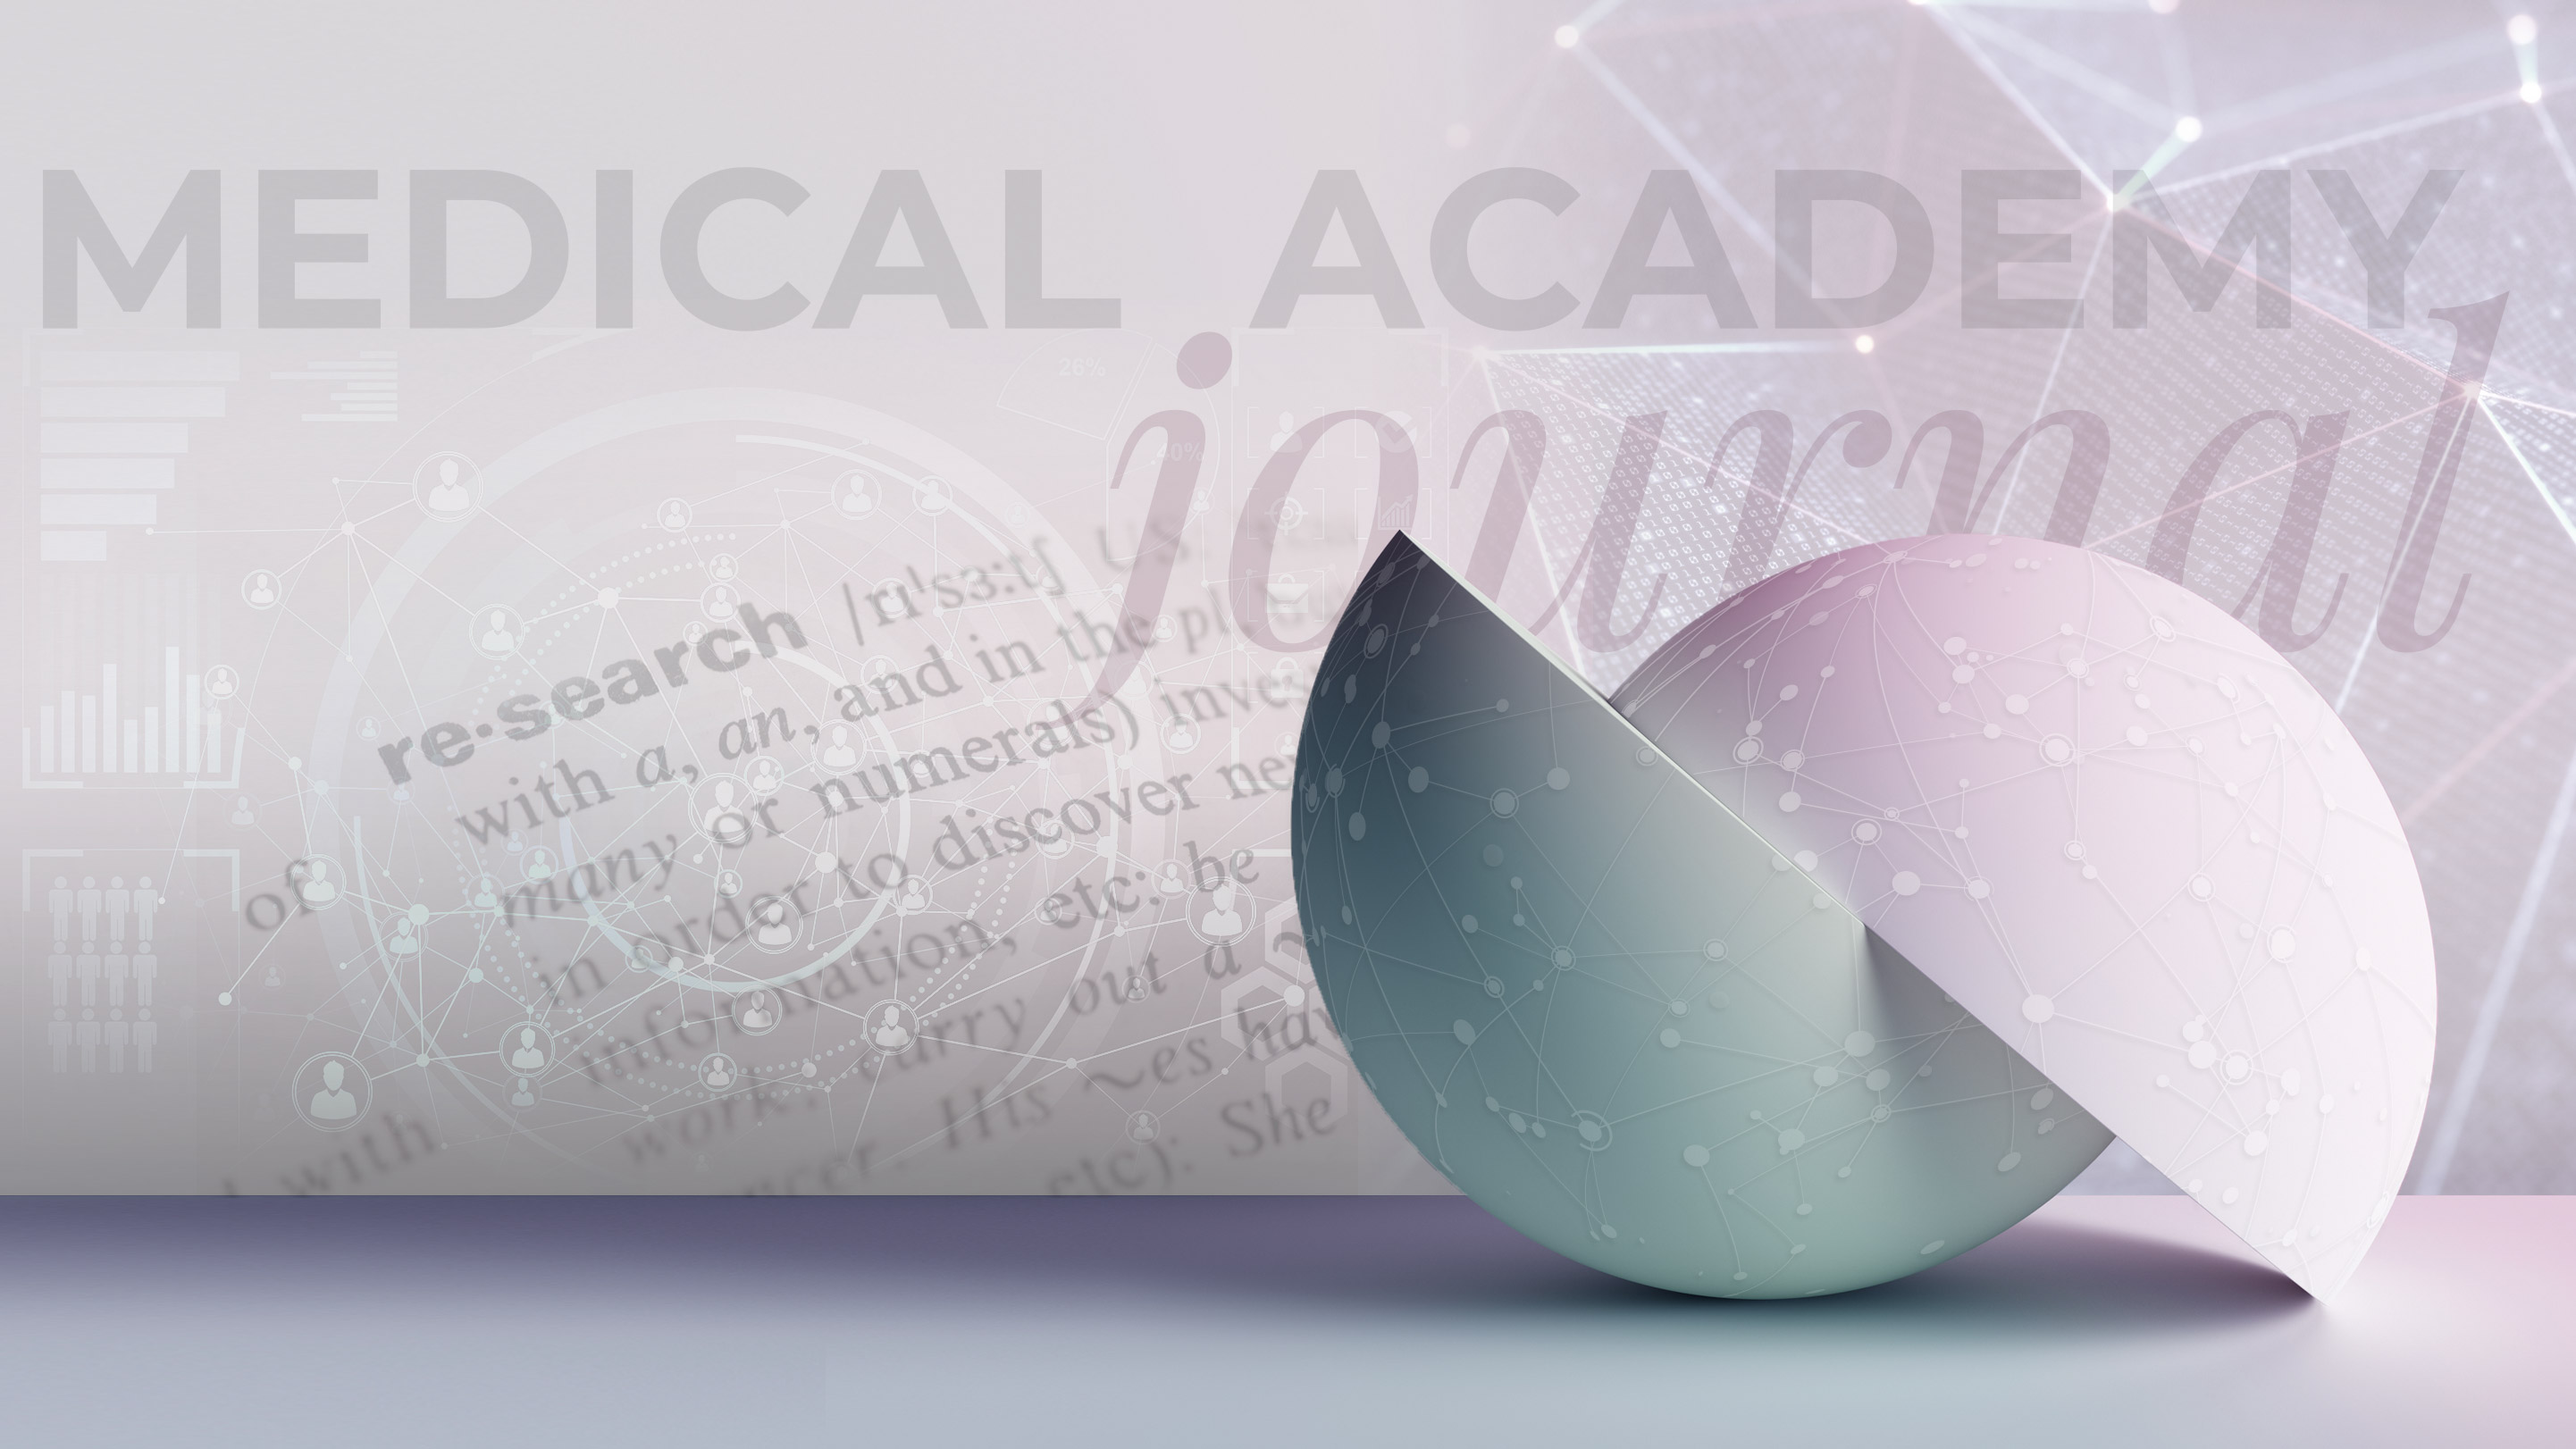 Medical Academy journal